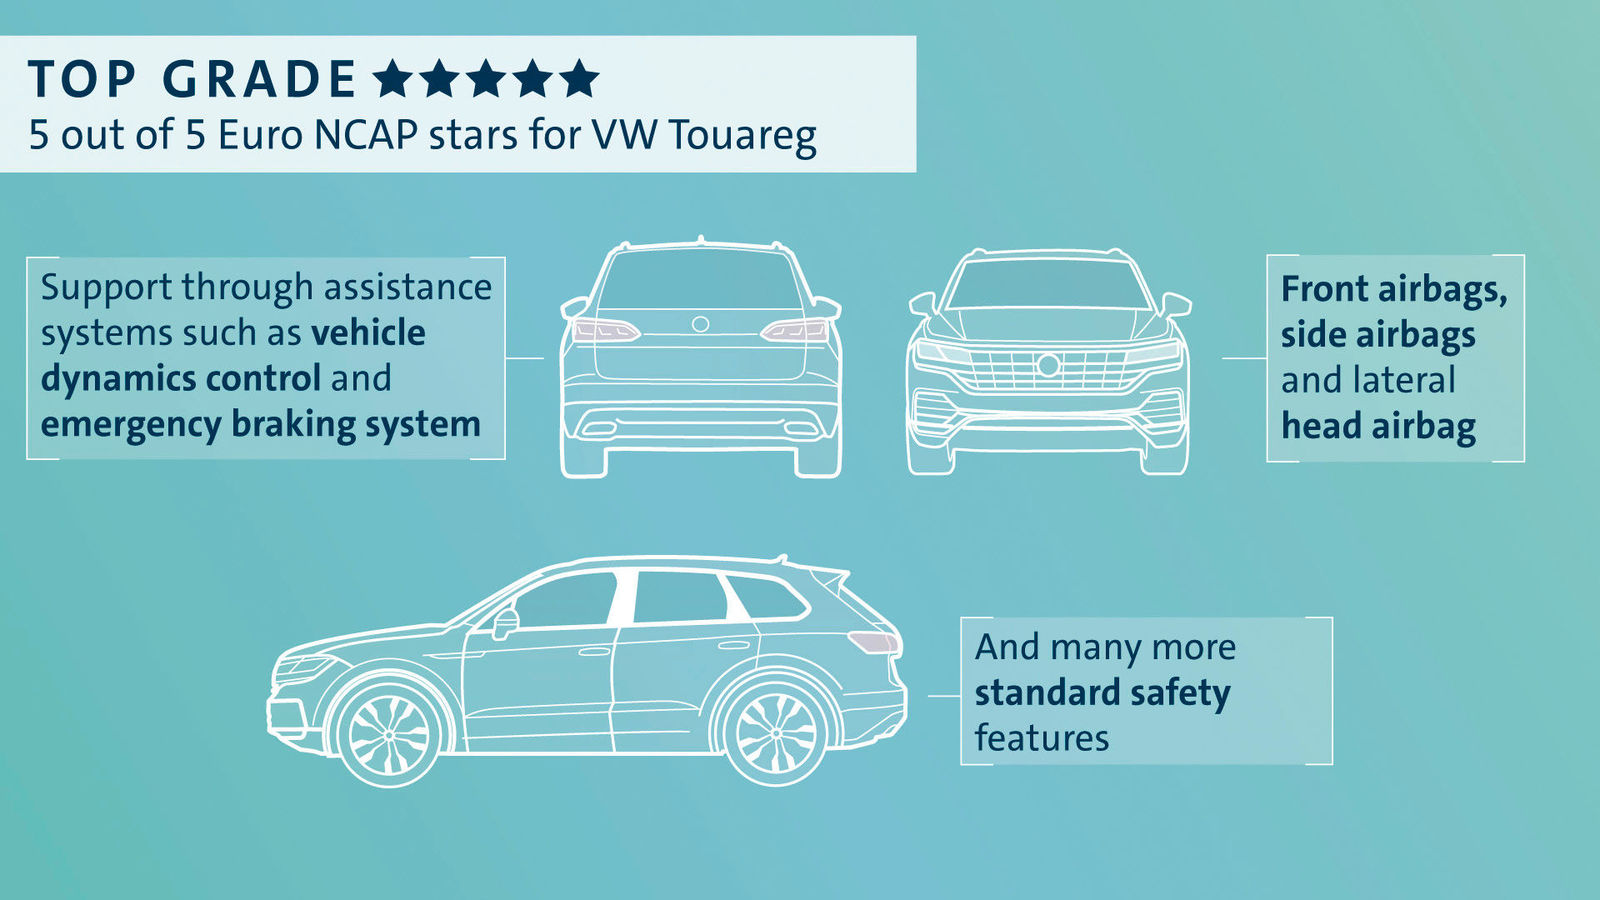 Top Grade: Five Euro NCAP Stars for the Touareg